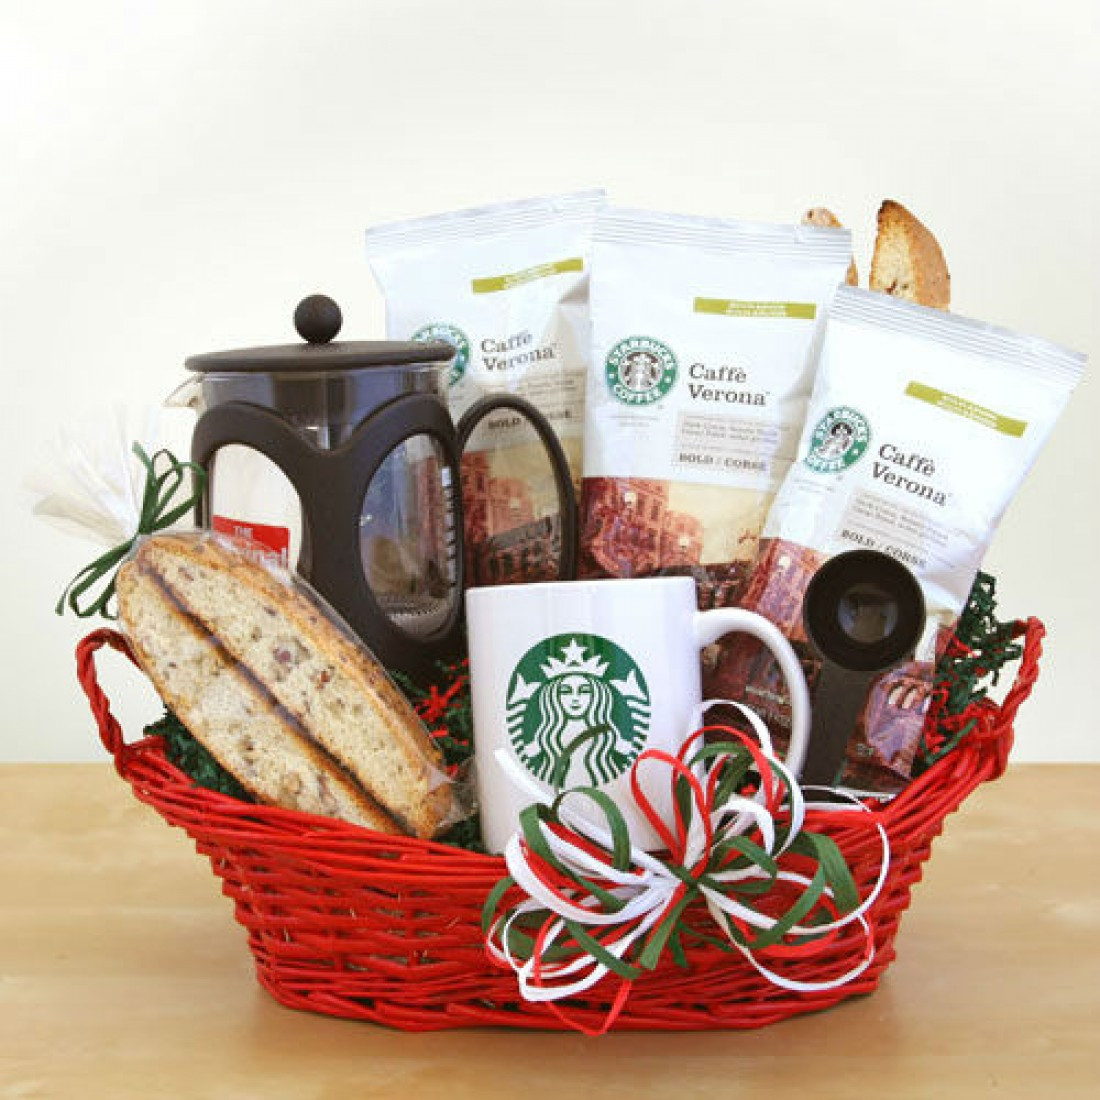 Best ideas about Starbucks Gift Basket Ideas
. Save or Pin Starbucks Italian Basket 8009 At Print EZ Now.